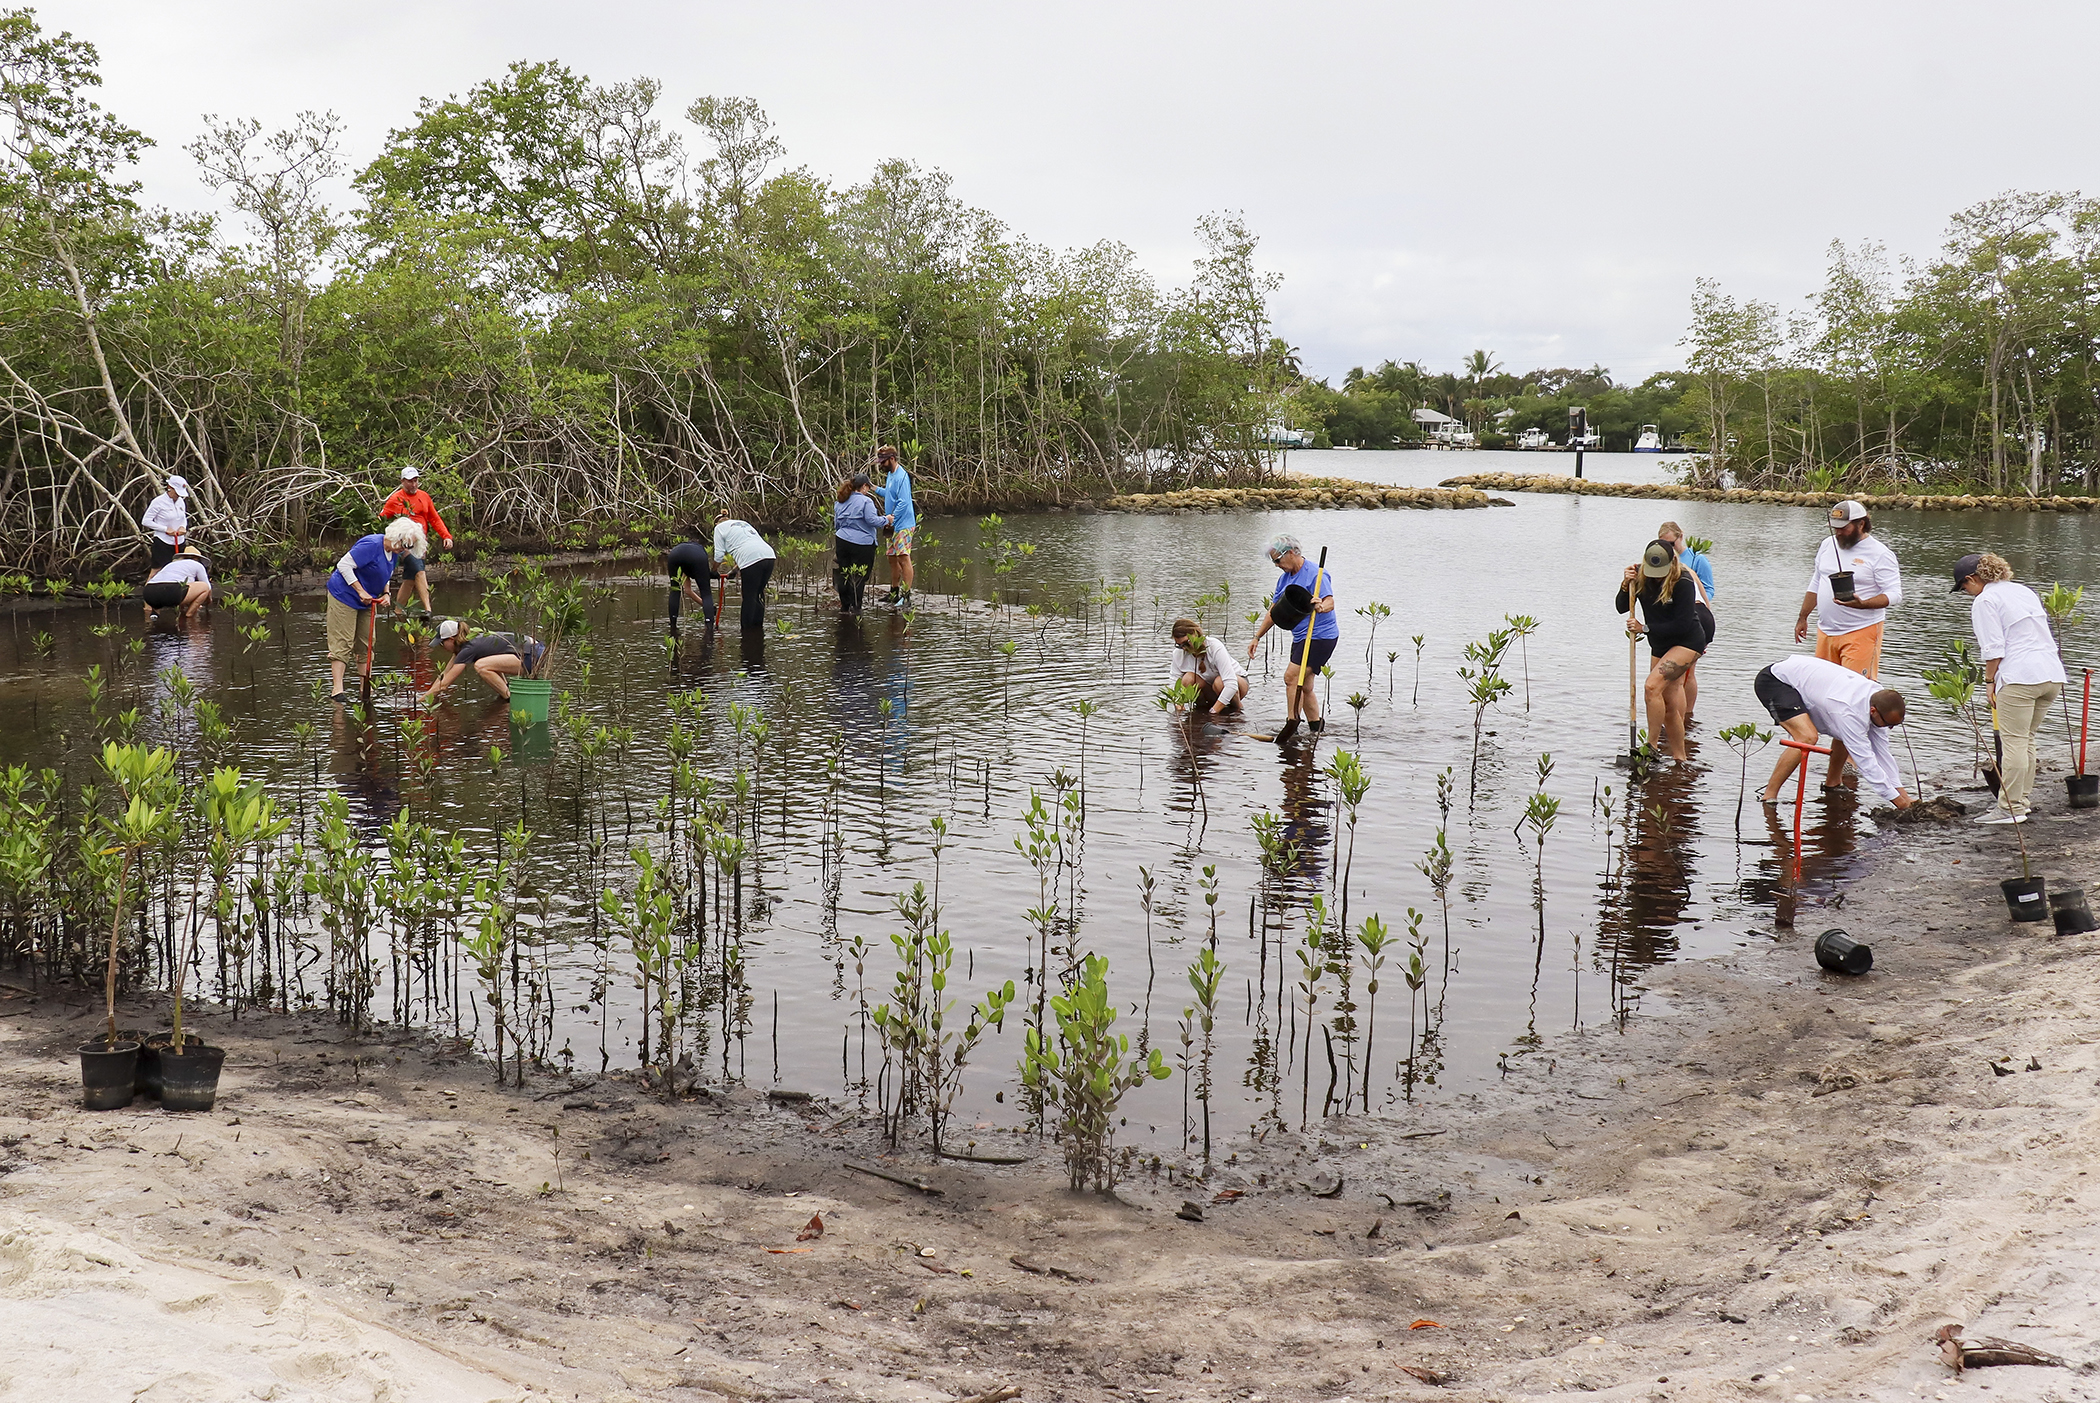 /NewsroomImages/1123/planting mangroves - 9653 - small.jpg